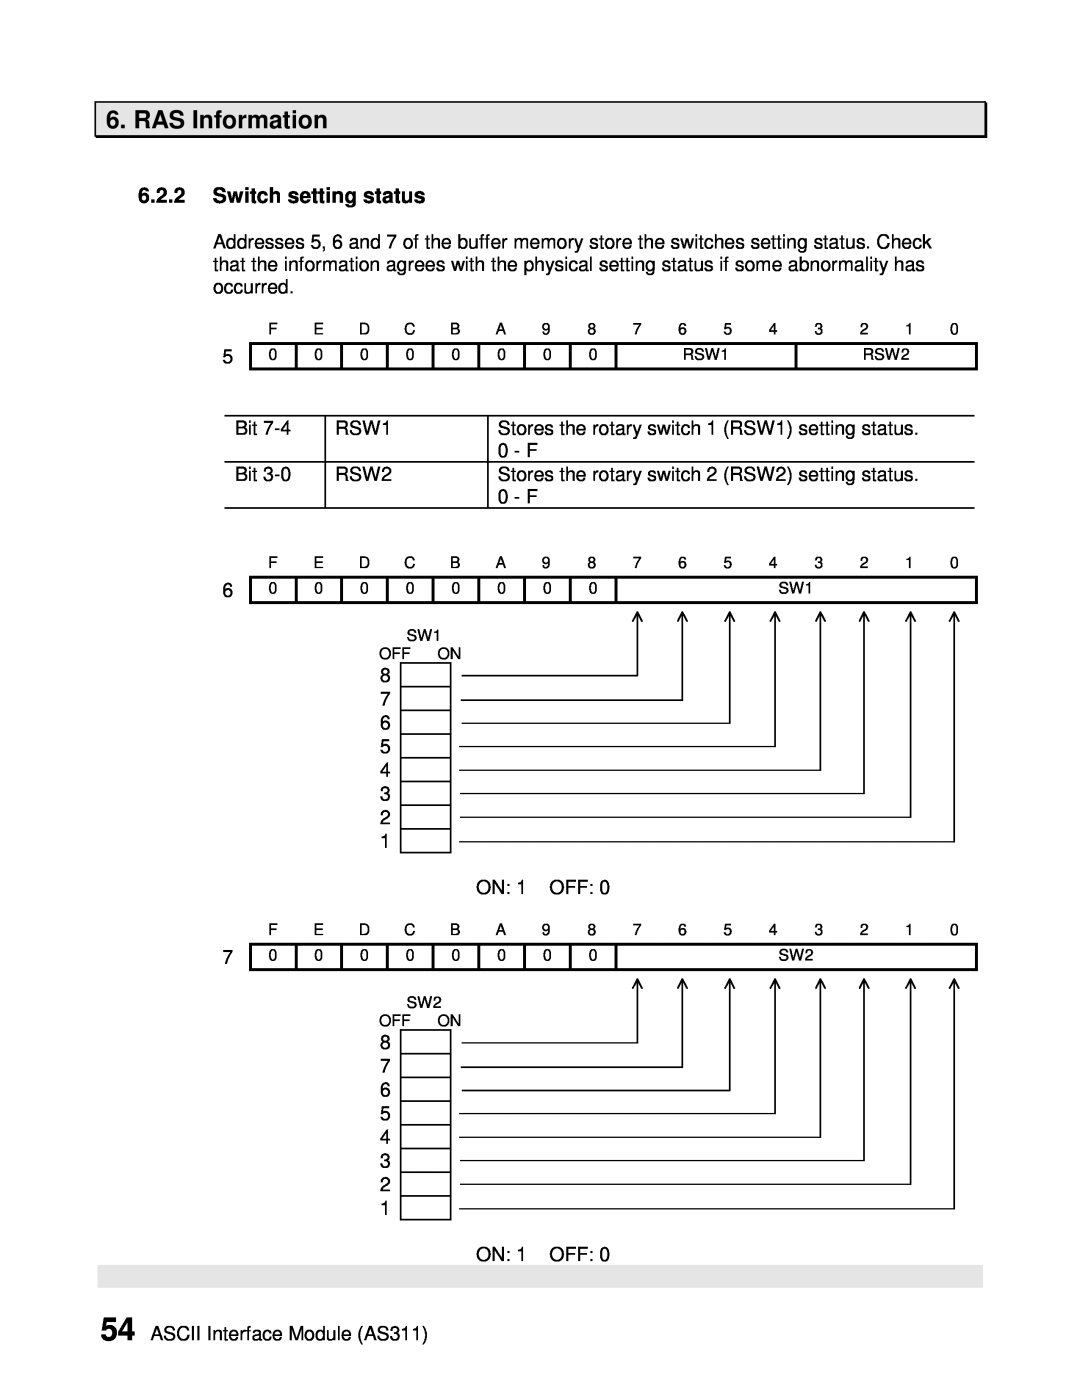 Toshiba AS311 user manual Switch setting status, RAS Information 